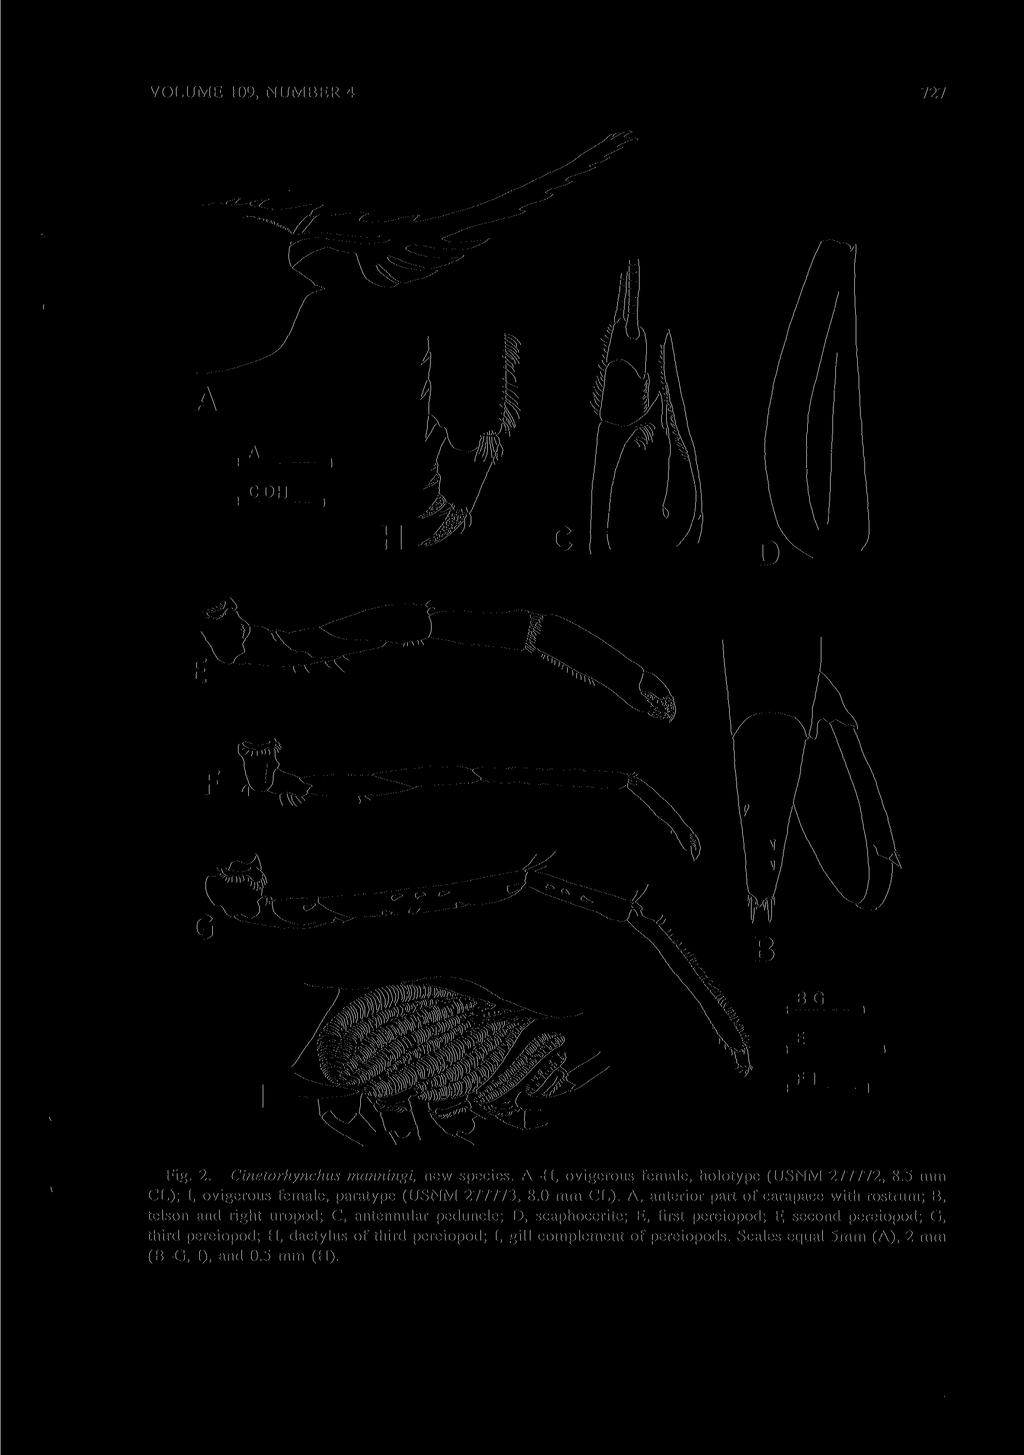 VOLUME 109, NUMBER 4 727 Fig. 2. Cinetorhynchus manningi, new species. A-H, ovigerous female, holotype (USNM 277772, 8.5 mm CL); I, ovigerous female, paratype (USNM 277773, 8.0 mm CL).